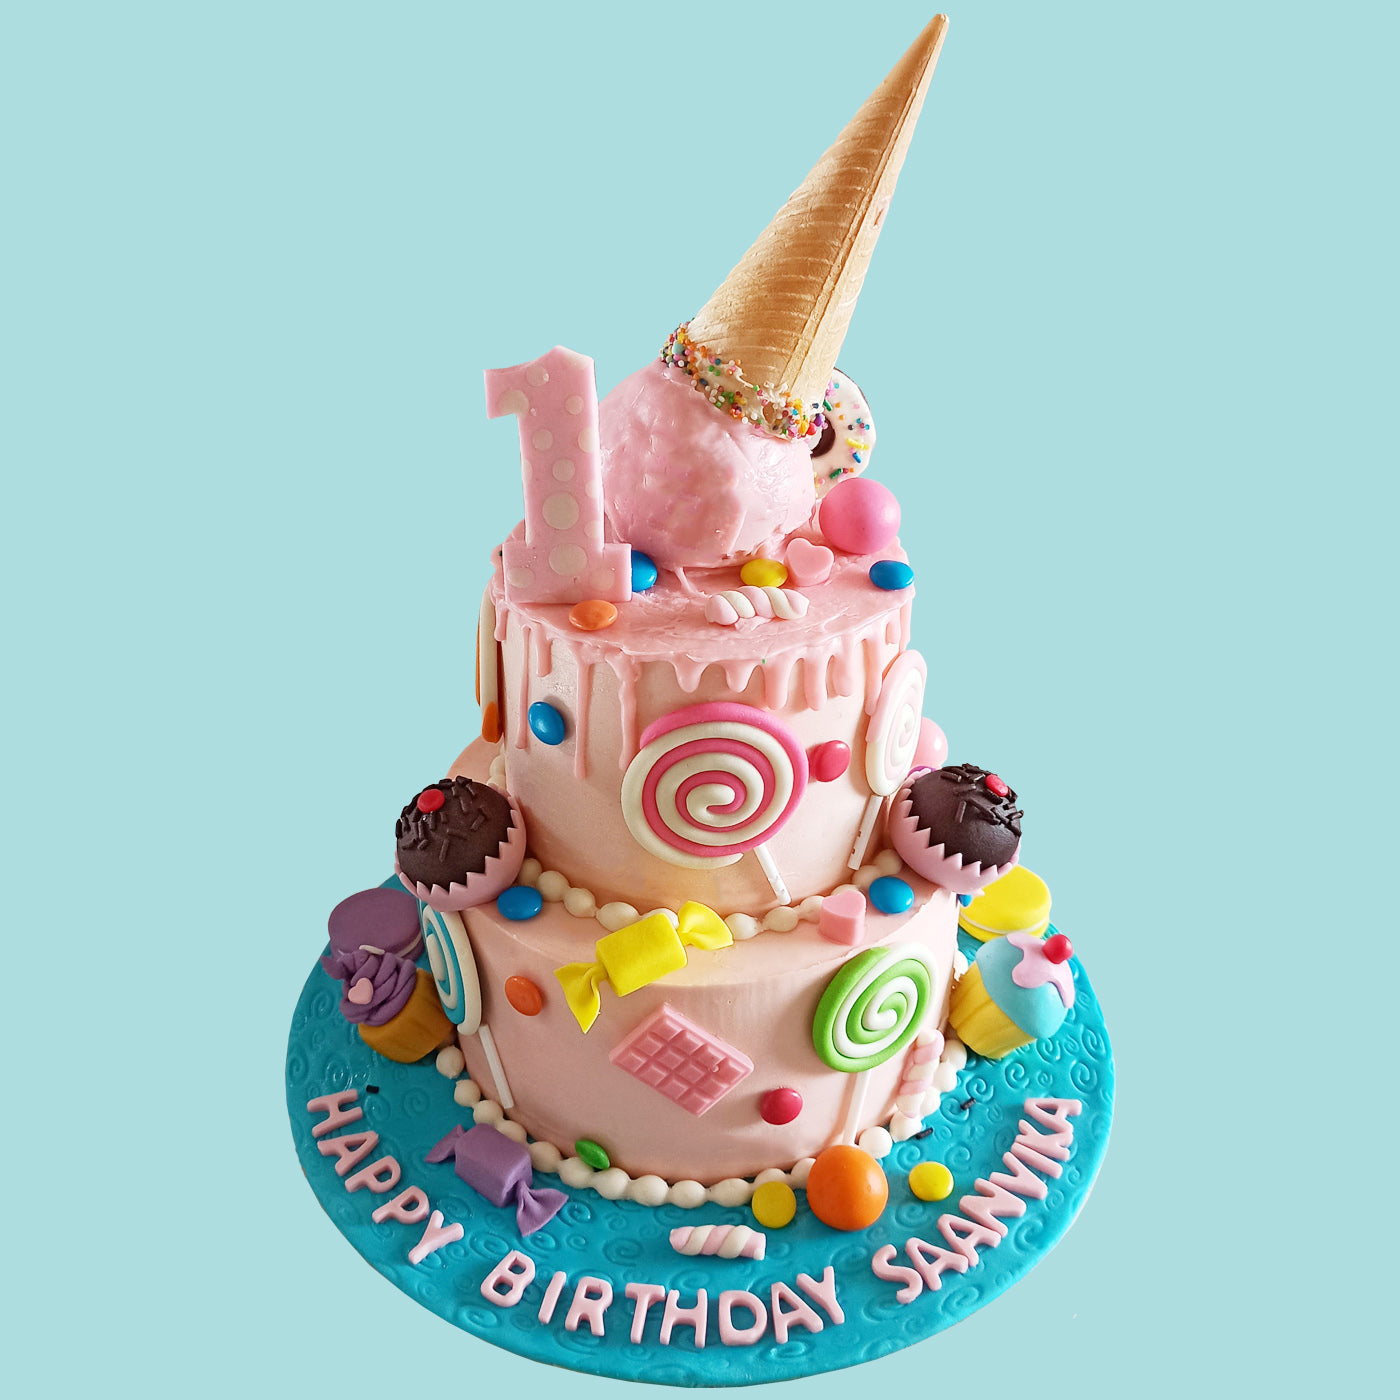 Buy/Send 2 Tier Anniversary Cake Online | Baker's Wagon